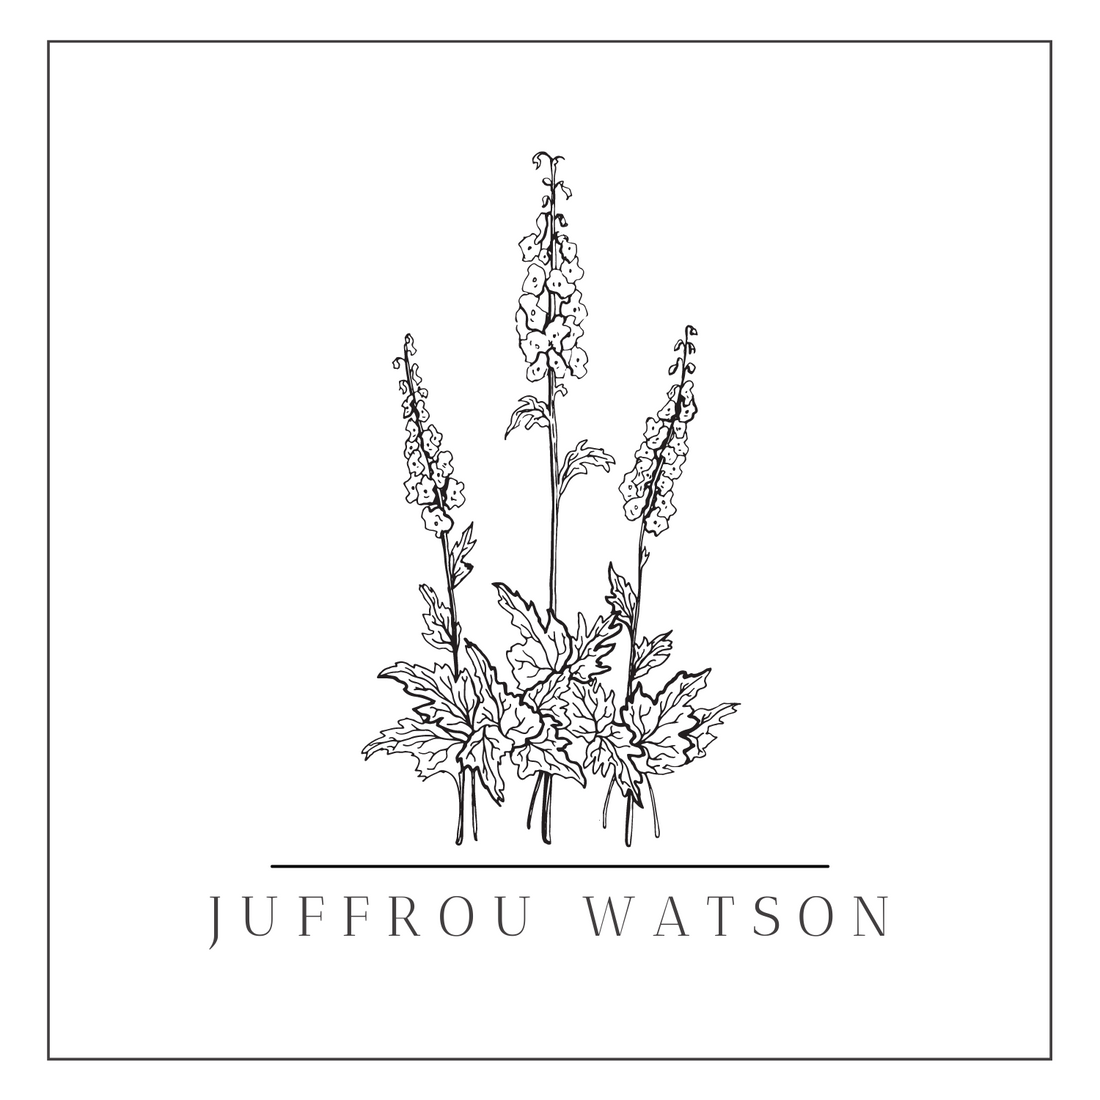 Juffrou Watson: Our Logo